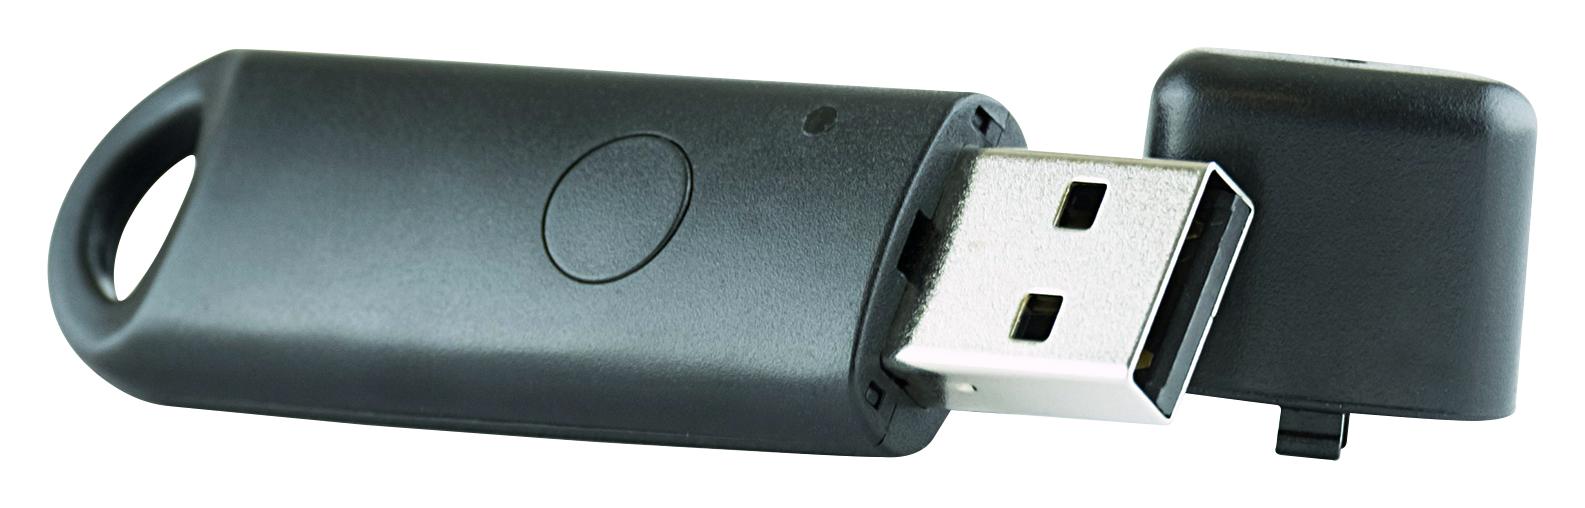 EL-USB-LITE DATA LOGGER, -10DEG TO 50DEG, USB LASCAR